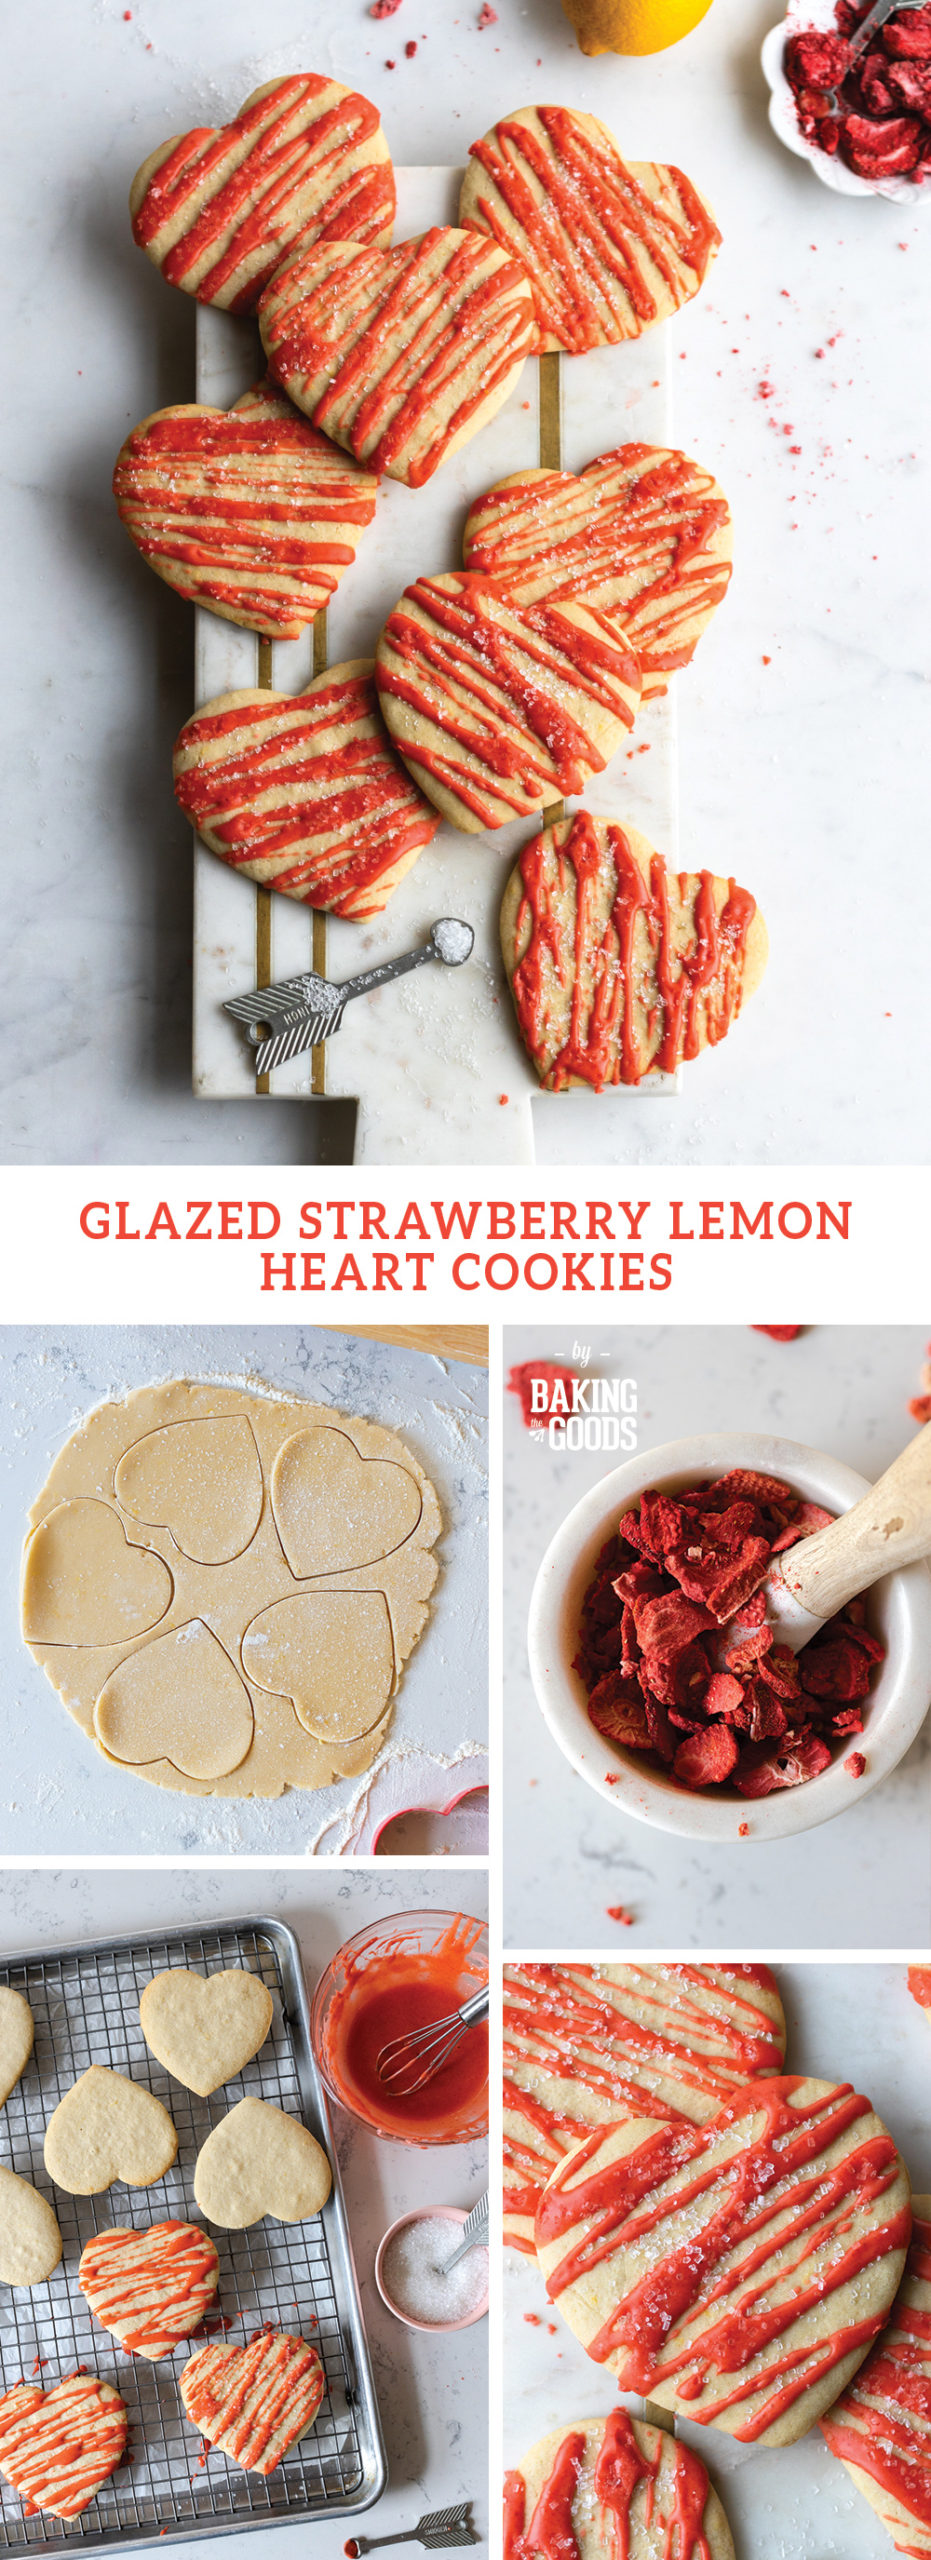 Glazed Strawberry Lemon Heart Cookies